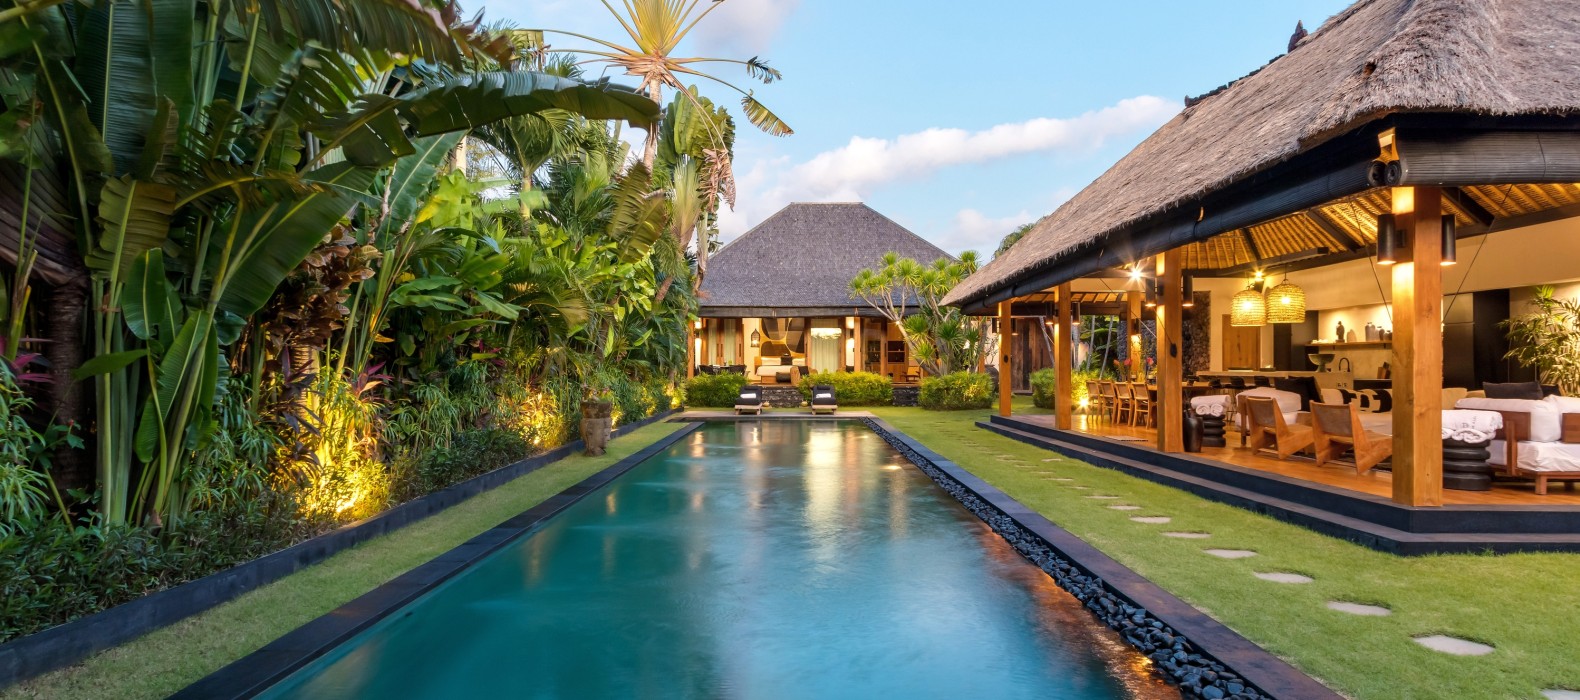 Exterior pool of Villa Wolfe in Bali